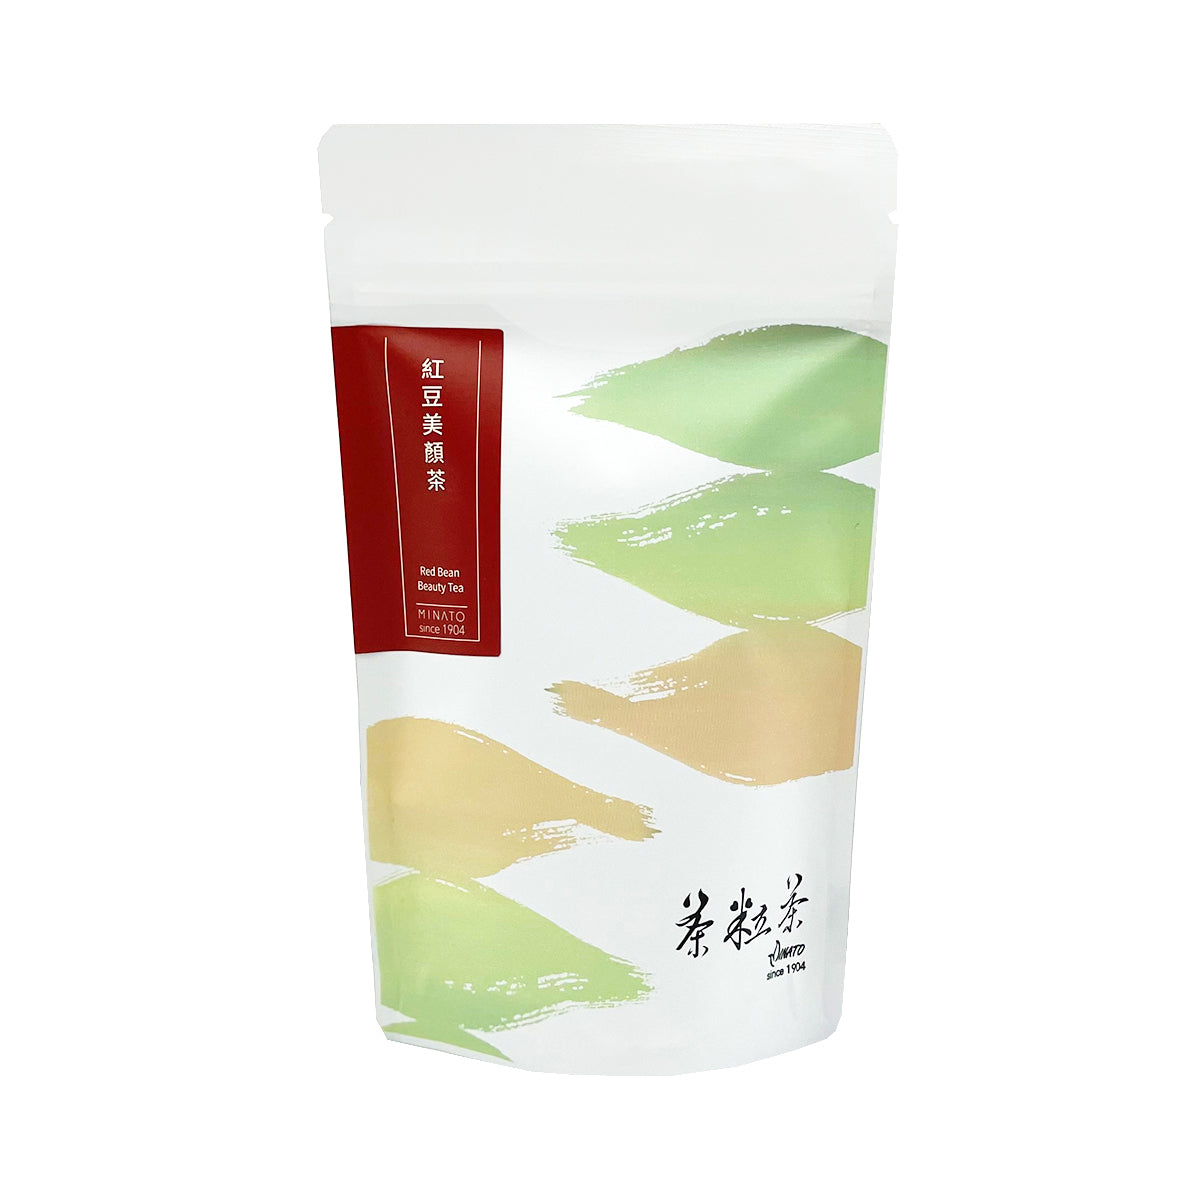 【 MINATO 】 Red Bean Beauty Tea (temple tea bag) 10g*8pcs